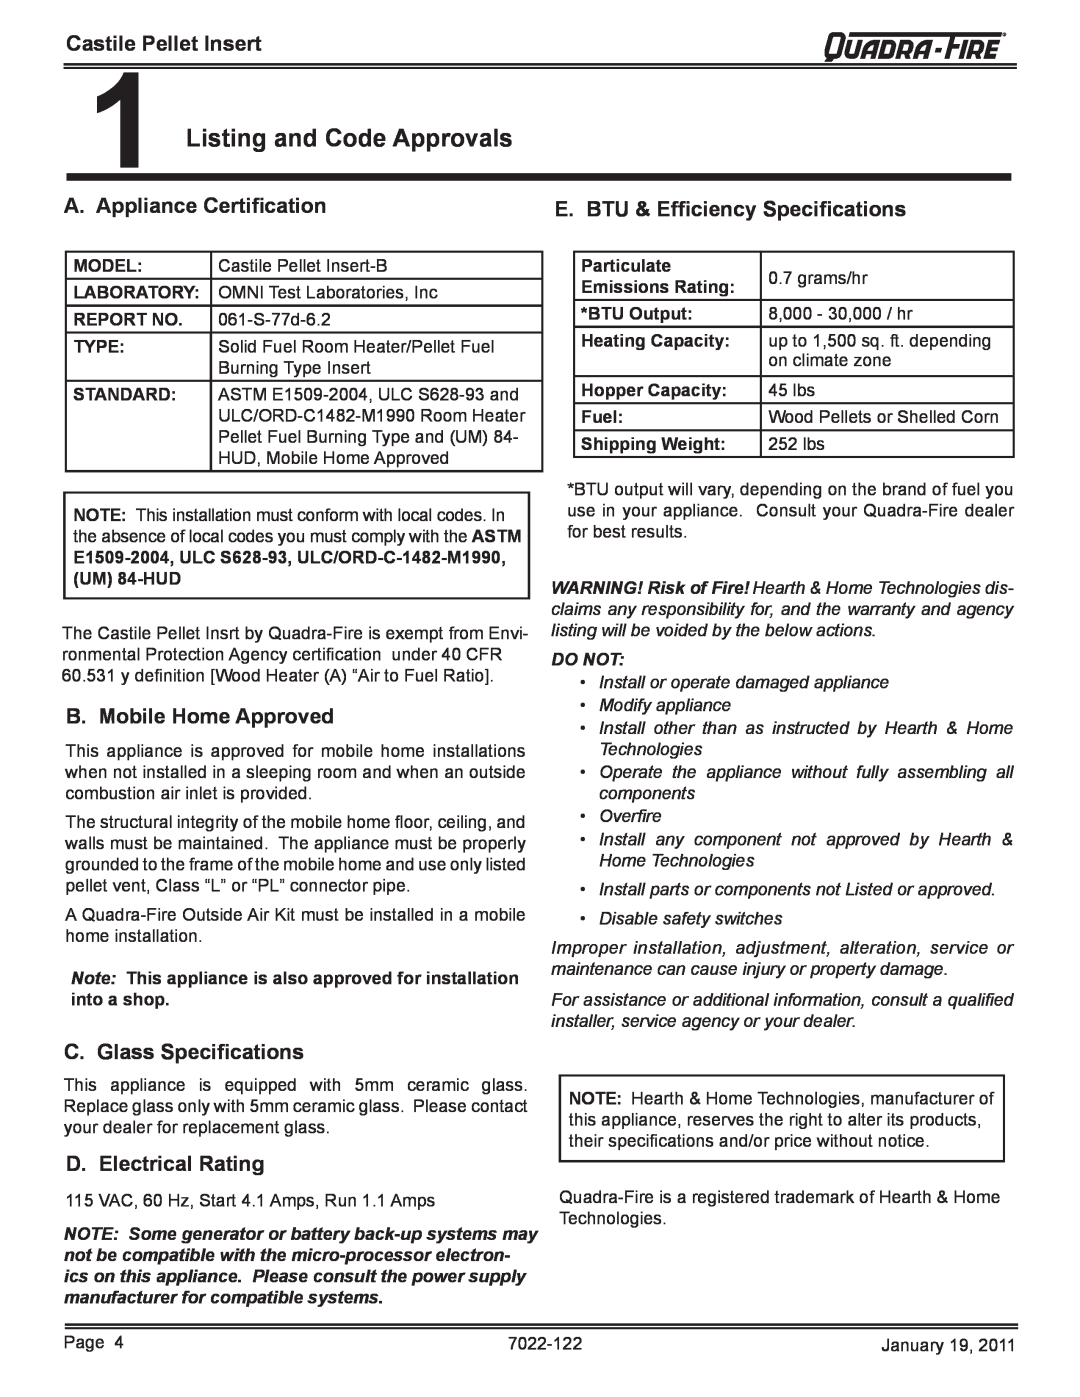 Quadra-Fire CASTILEI-MBK Listing and Code Approvals, A. Appliance Certiﬁcation, E. BTU & Efﬁciency Speciﬁcations, Model 